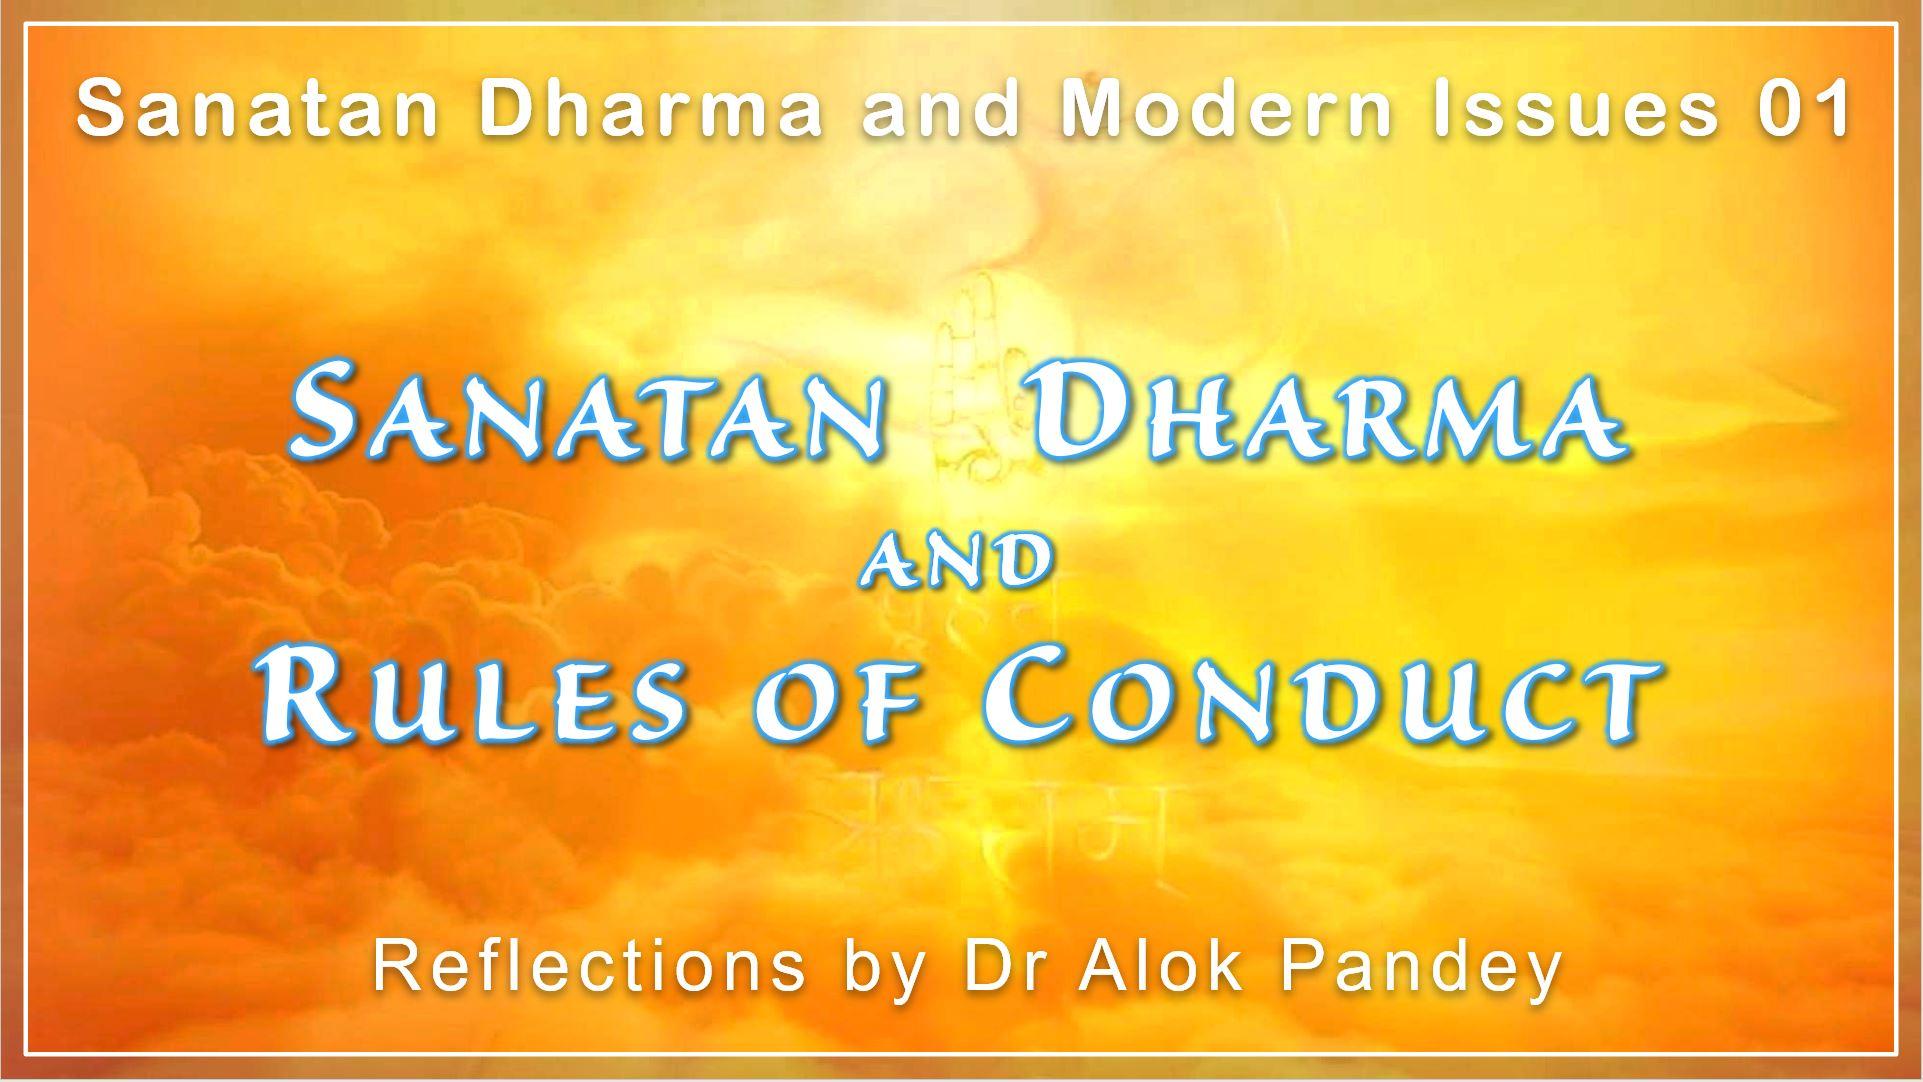 sanatan-dharma-and-rules-of-conduct-sdm-01-auromaa